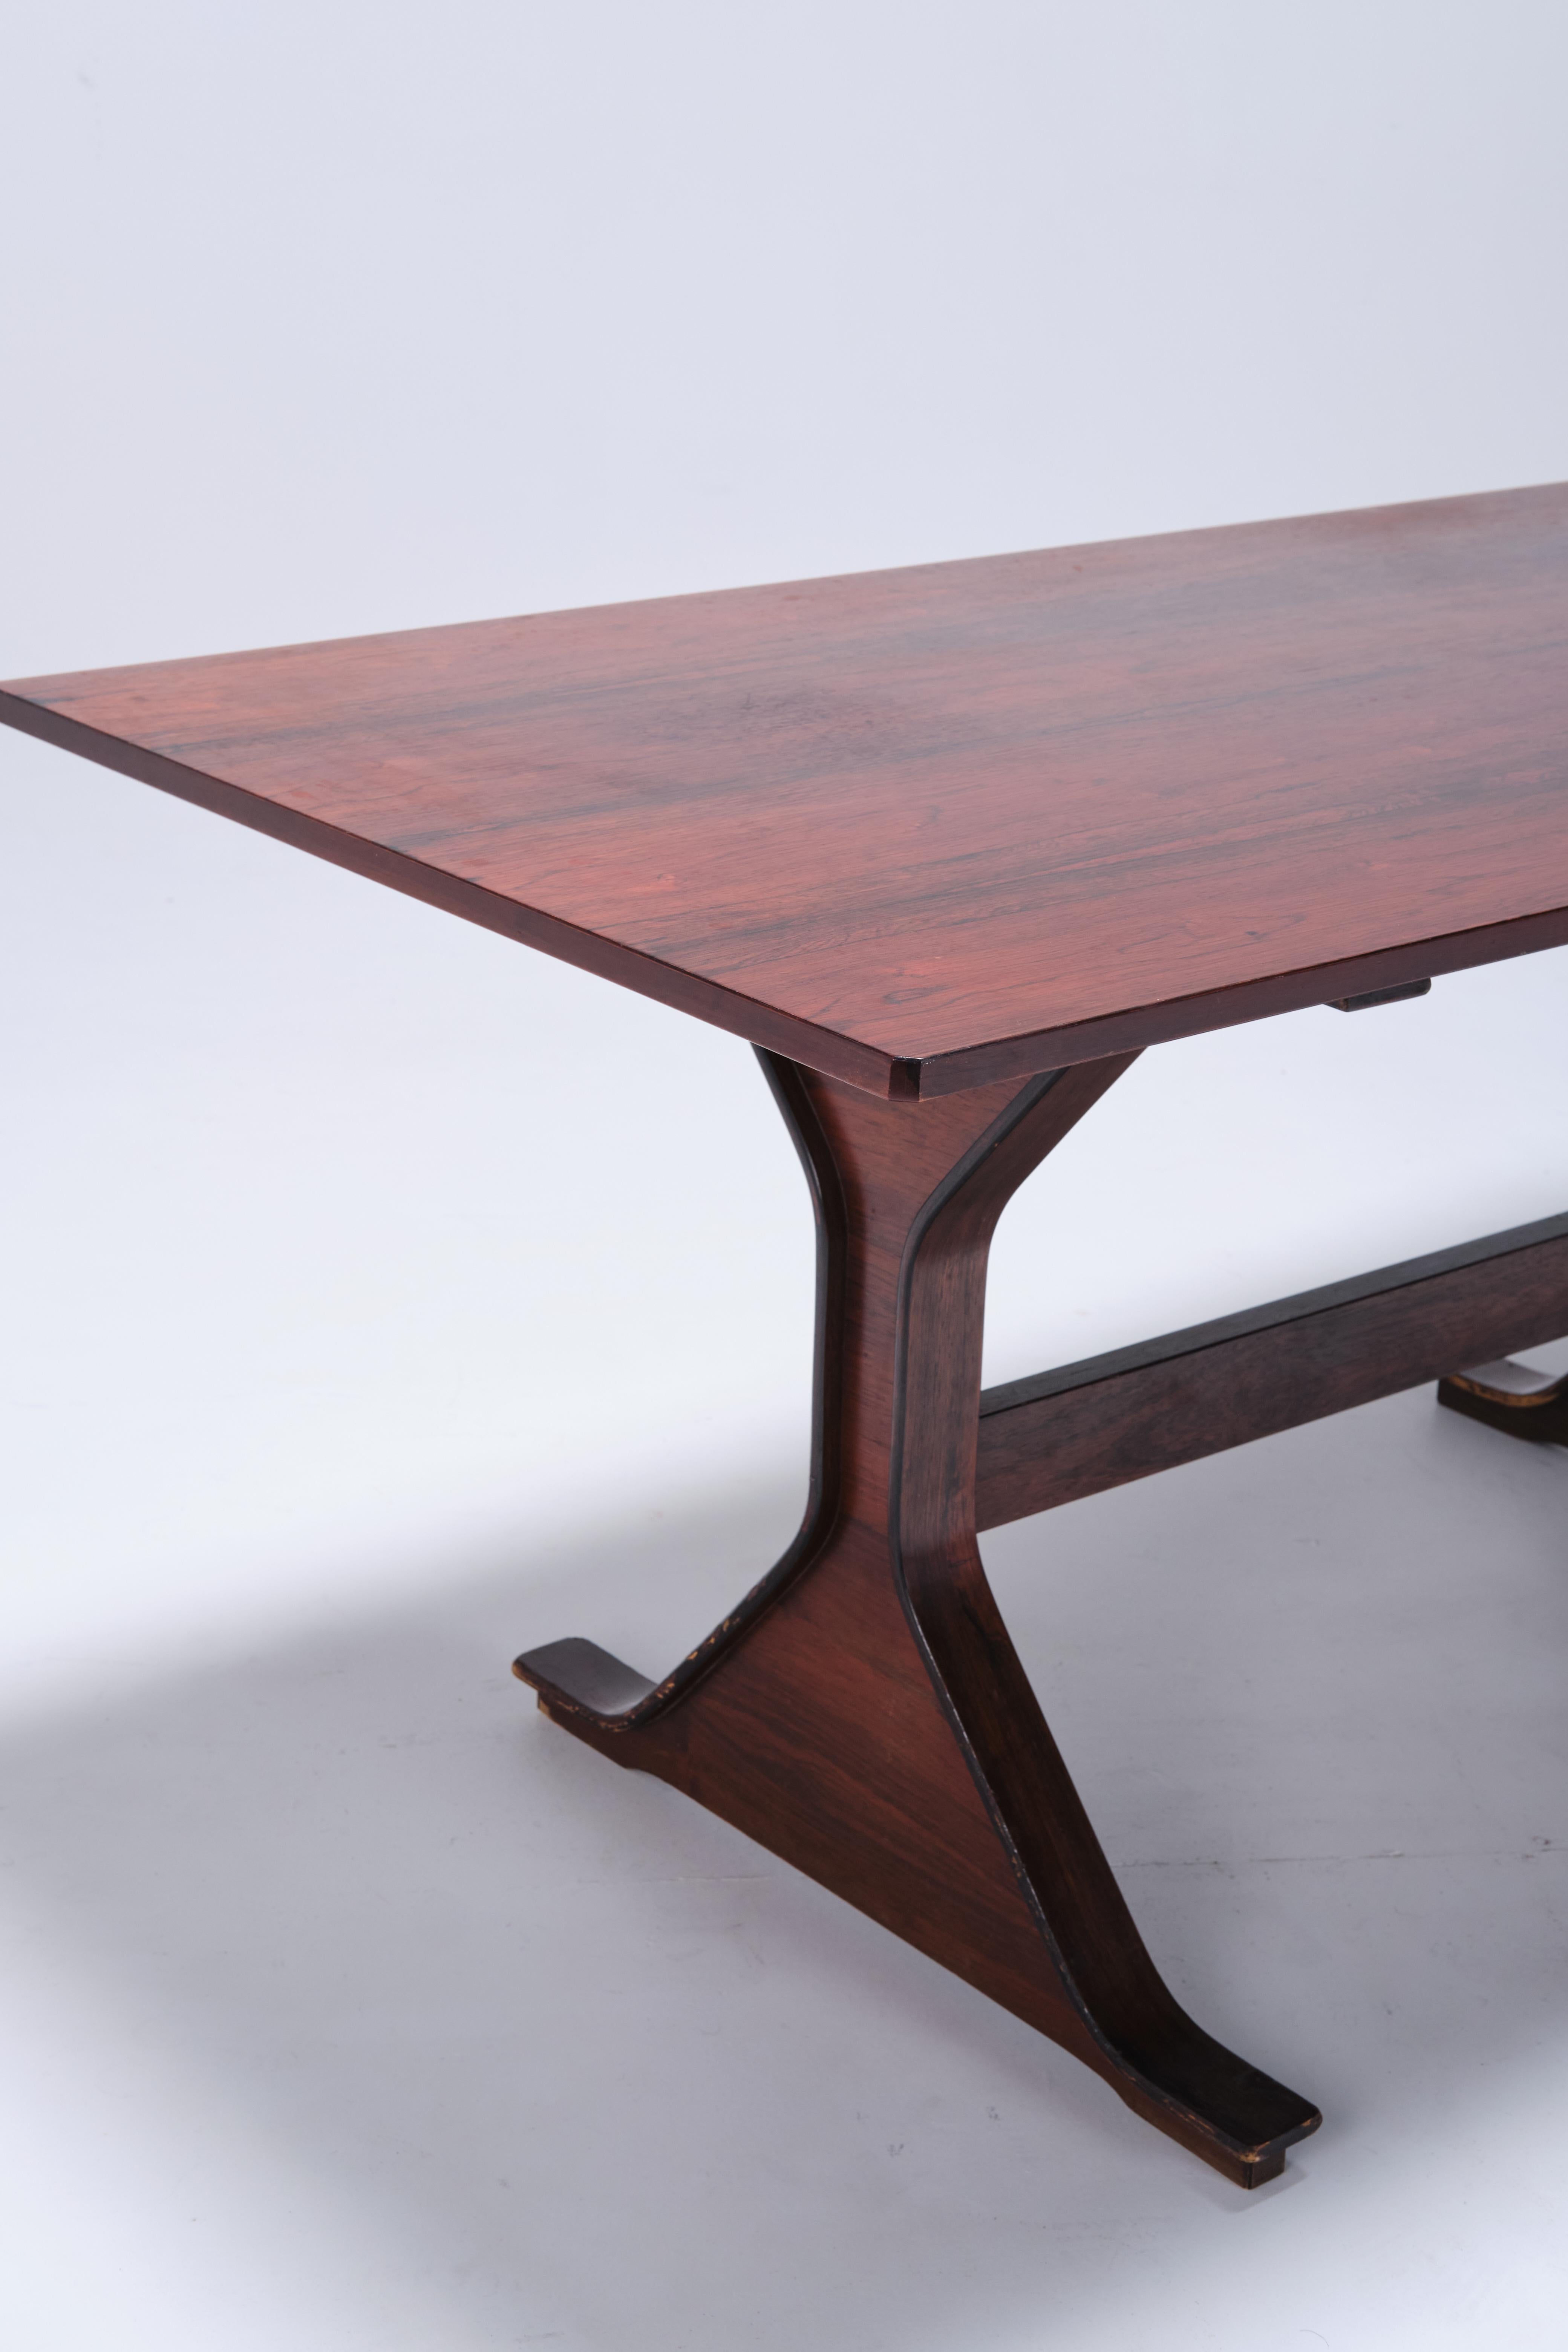 Gianfranco Frattini Wood table or desk for Bernini Italian Design 1950s In Good Condition For Sale In Milan, IT